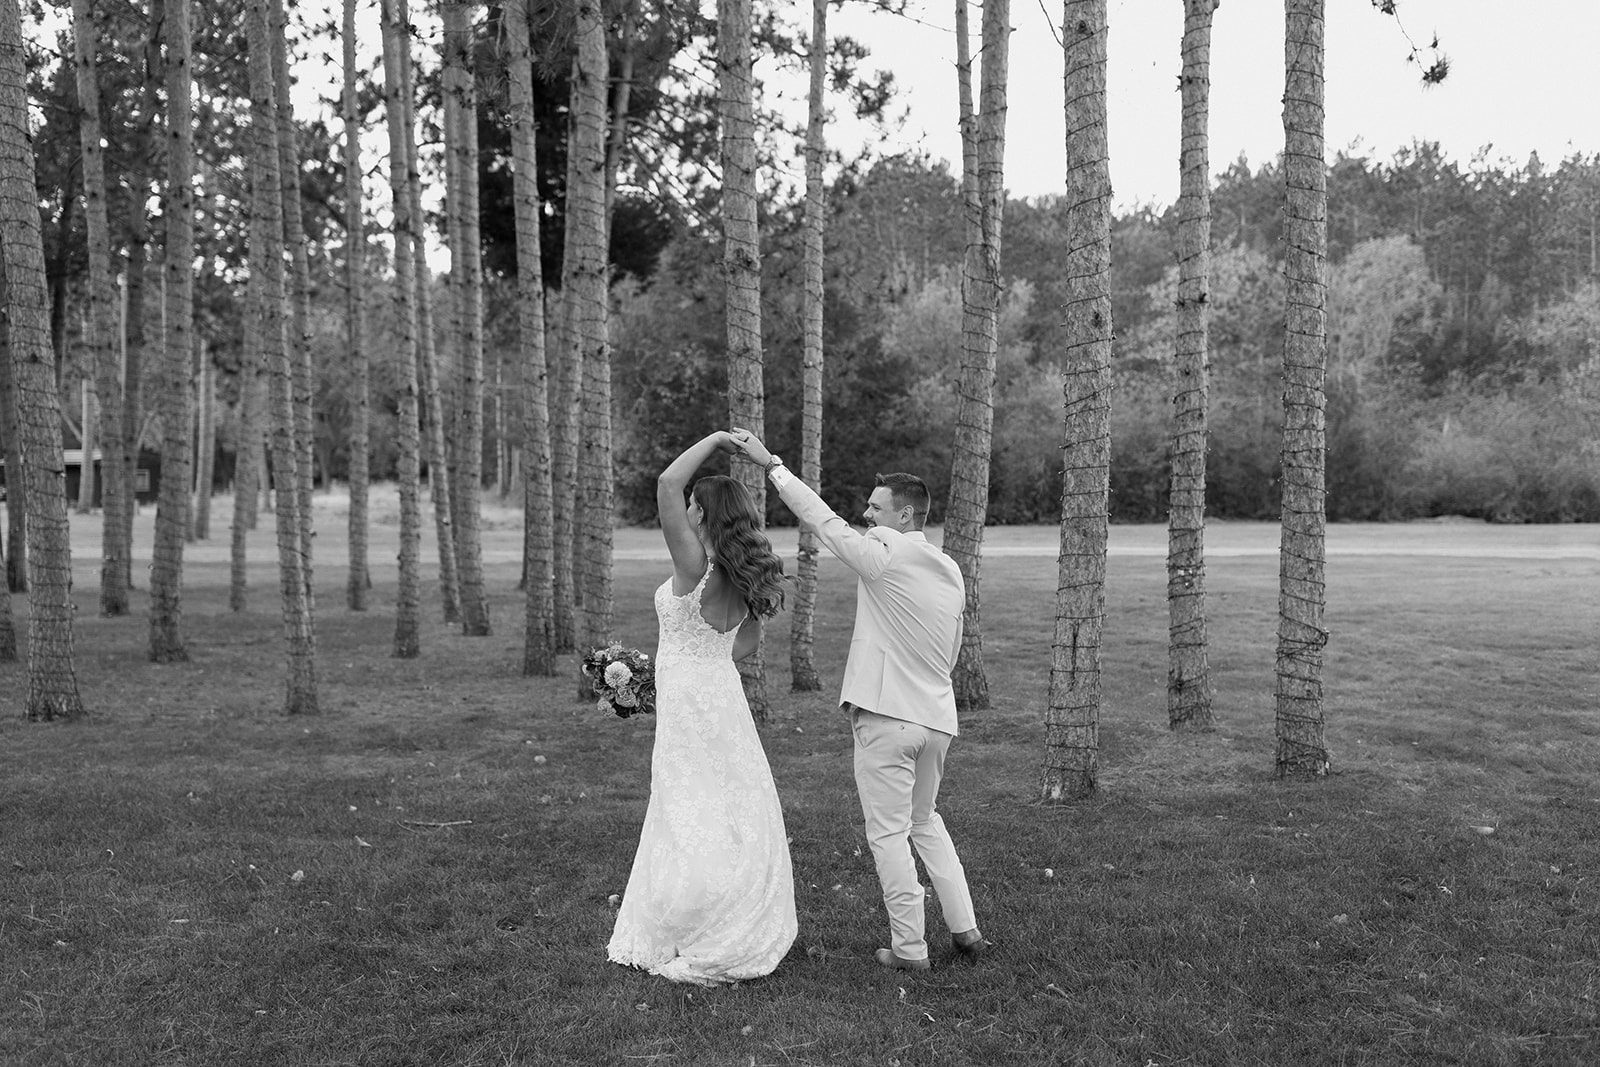 Groom twirls bride in between pine trees